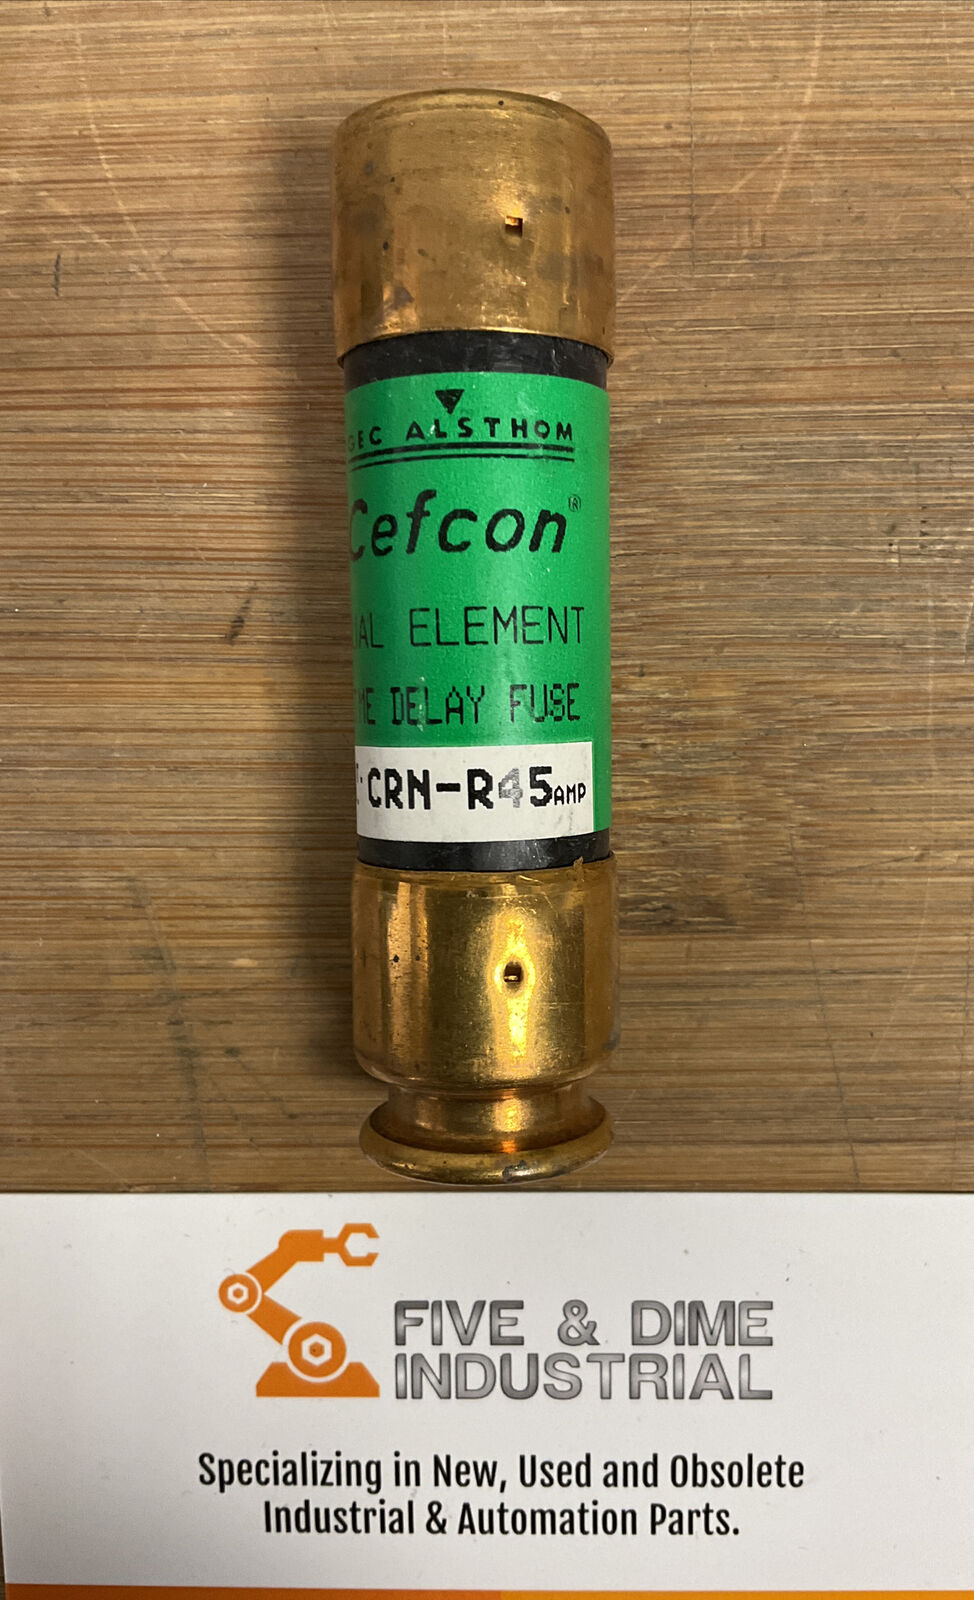 Cefcon CRN-R45 Dual Element Fuse 45A  (BL112)